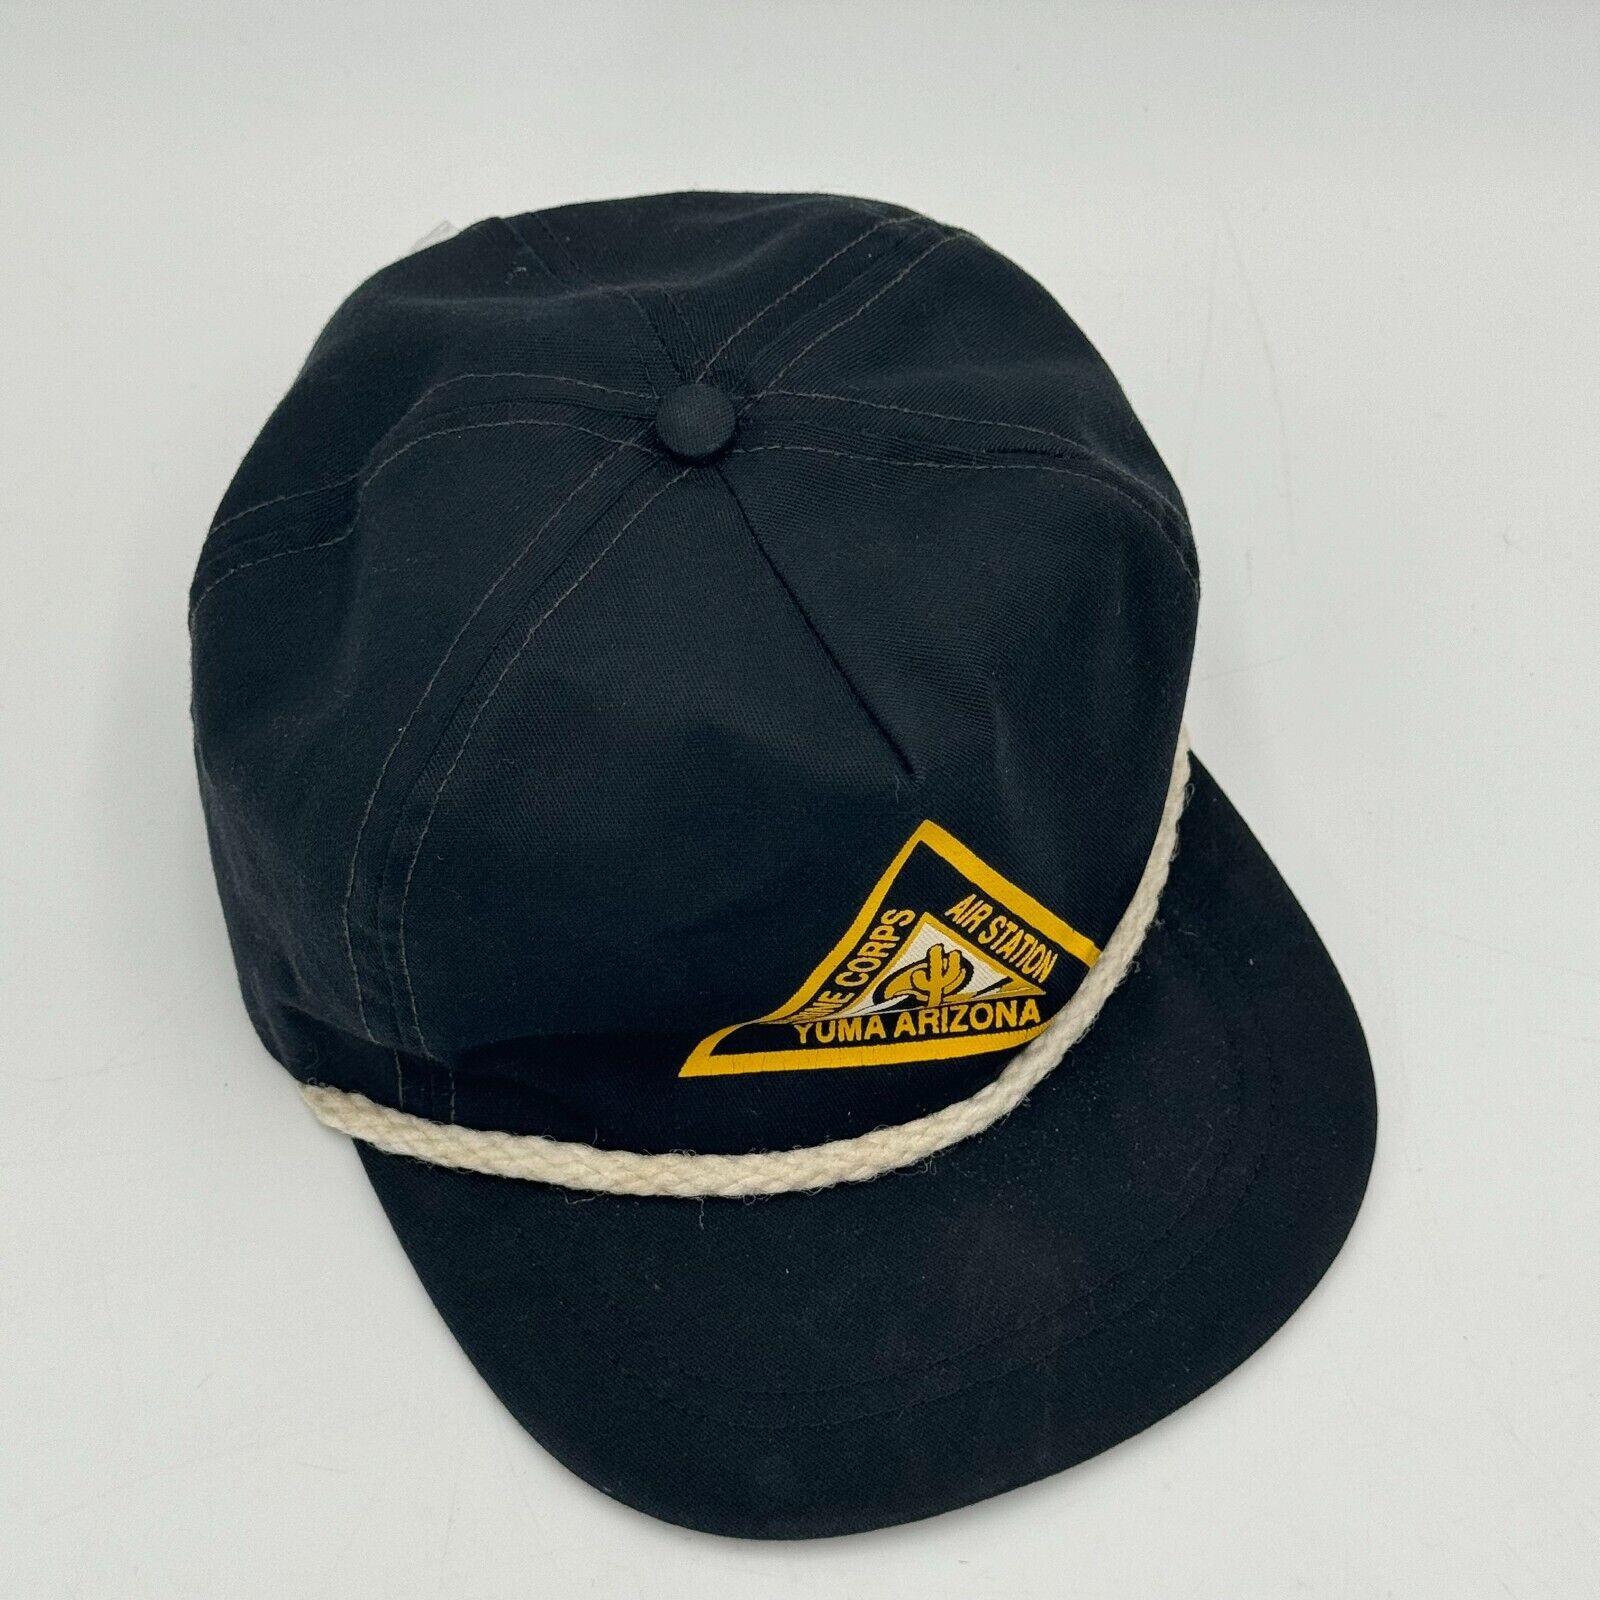 Marine Corps Air Station Yuma Arizona FlatBill Black Rope Leather Adjustable Hat